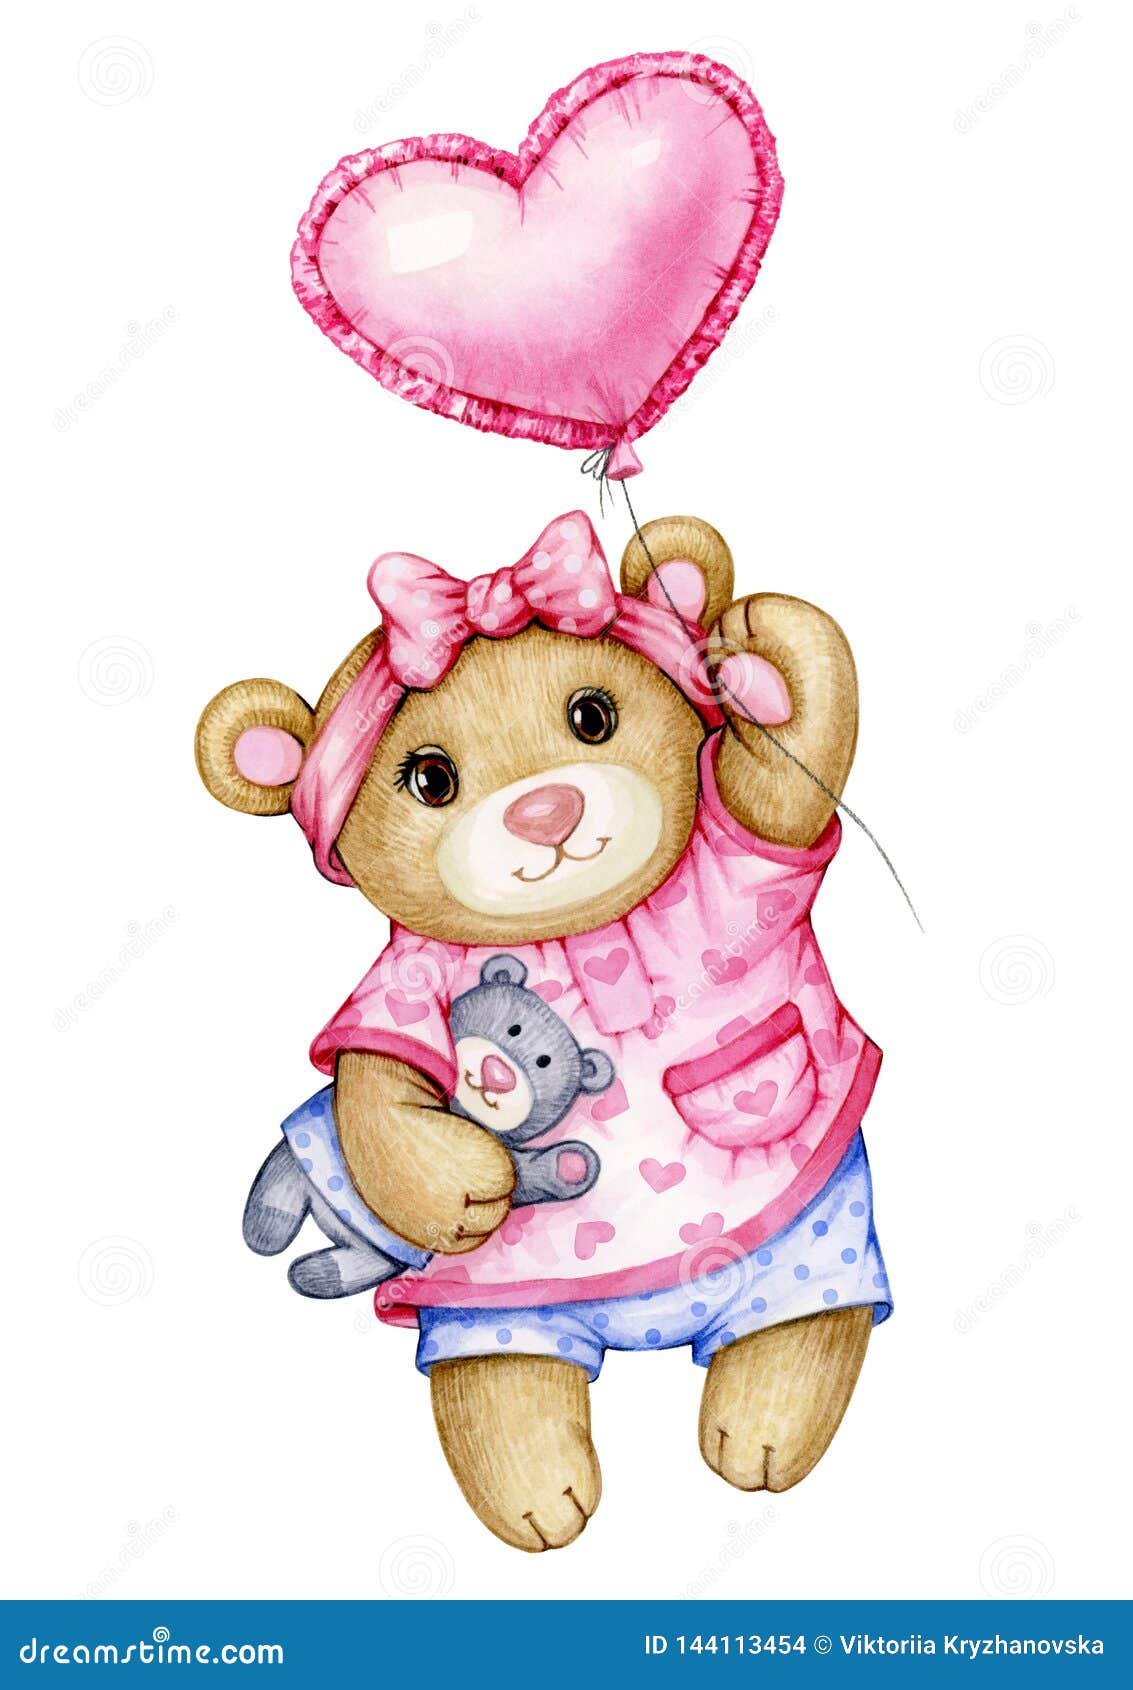 Cute Baby Teddy Bear Cartoon with Balloon. Stock Photo - Image of hanging,  cartoon: 144113454